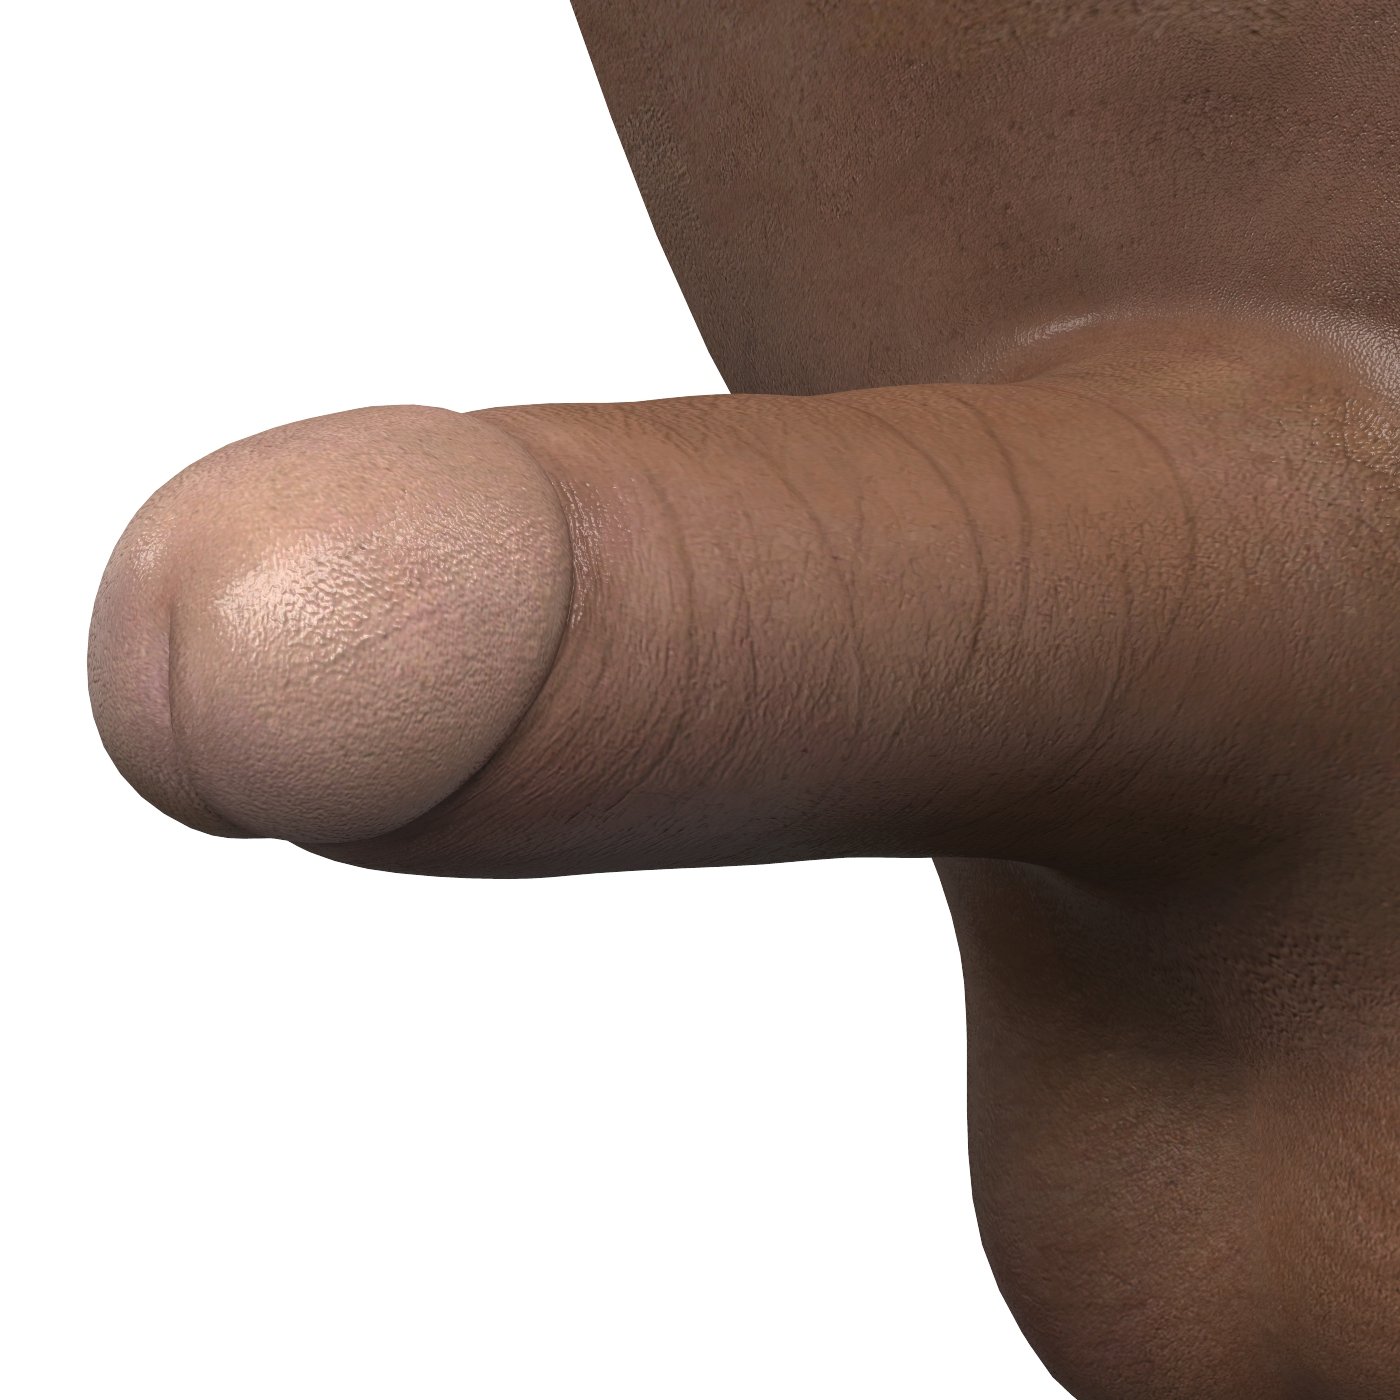 Best of Black man penis images